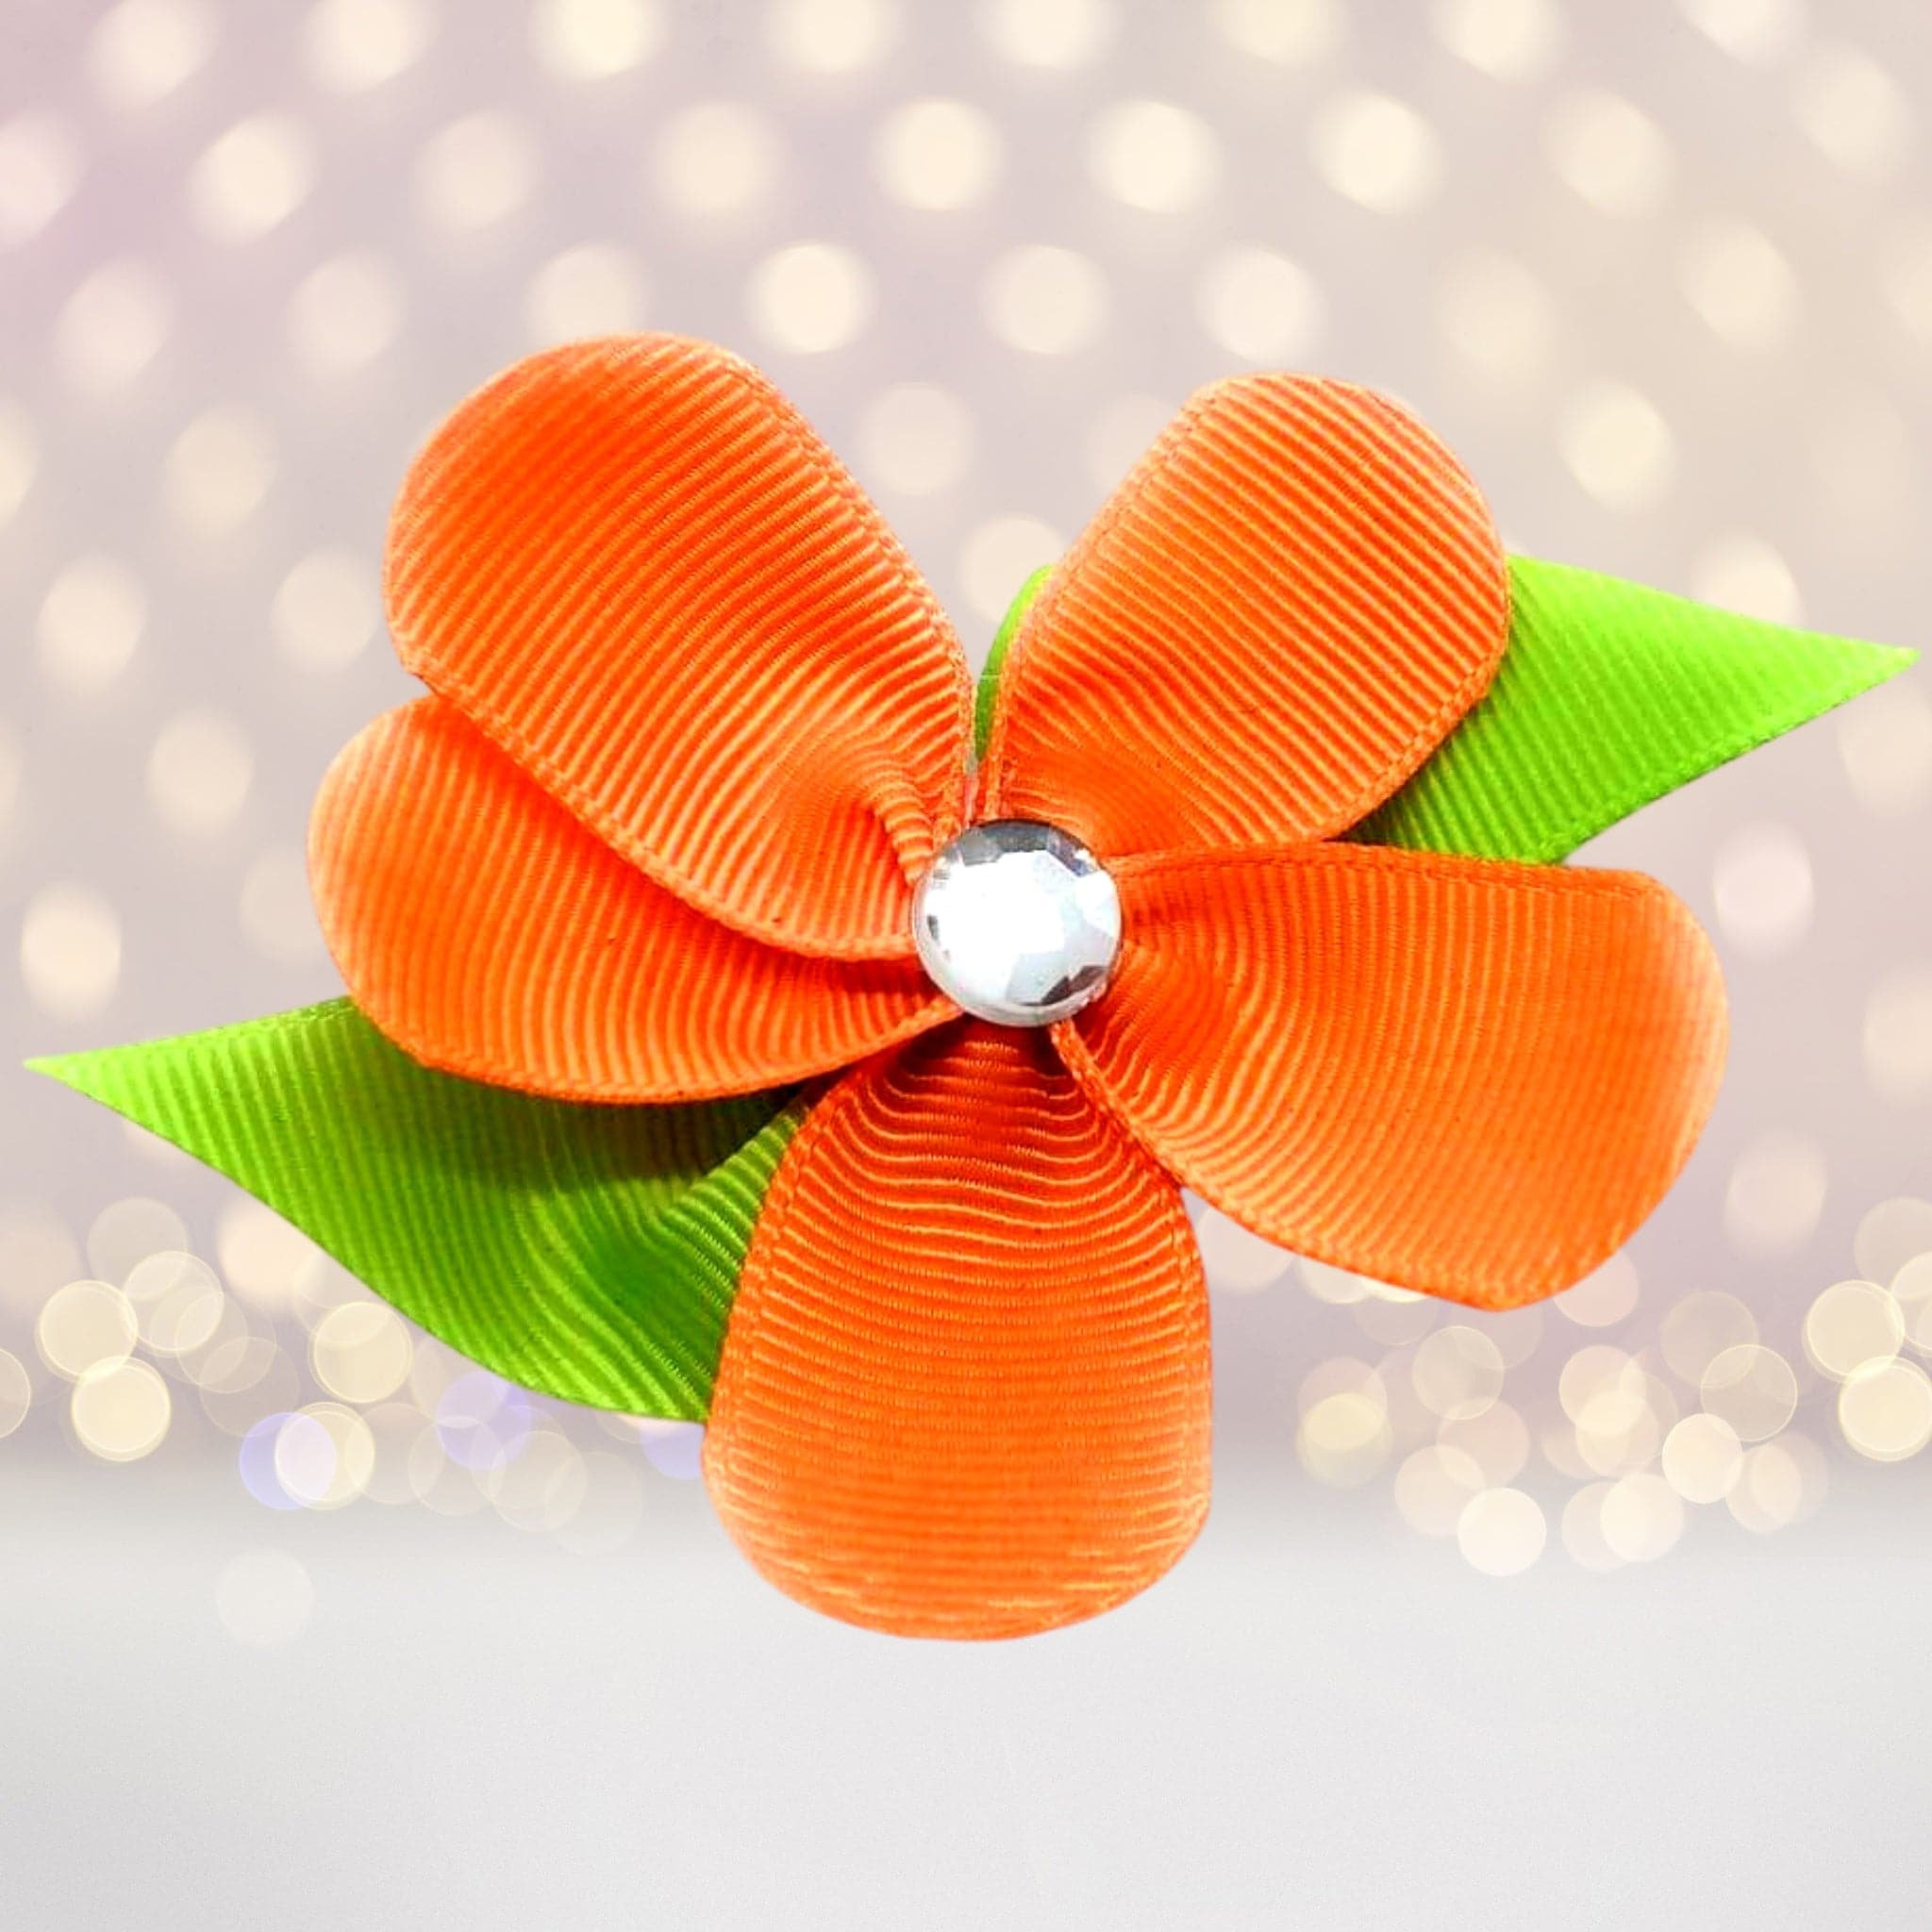 Orange Ribbon Hair Flower Clip, Orange Flower Hair Clip - Orange